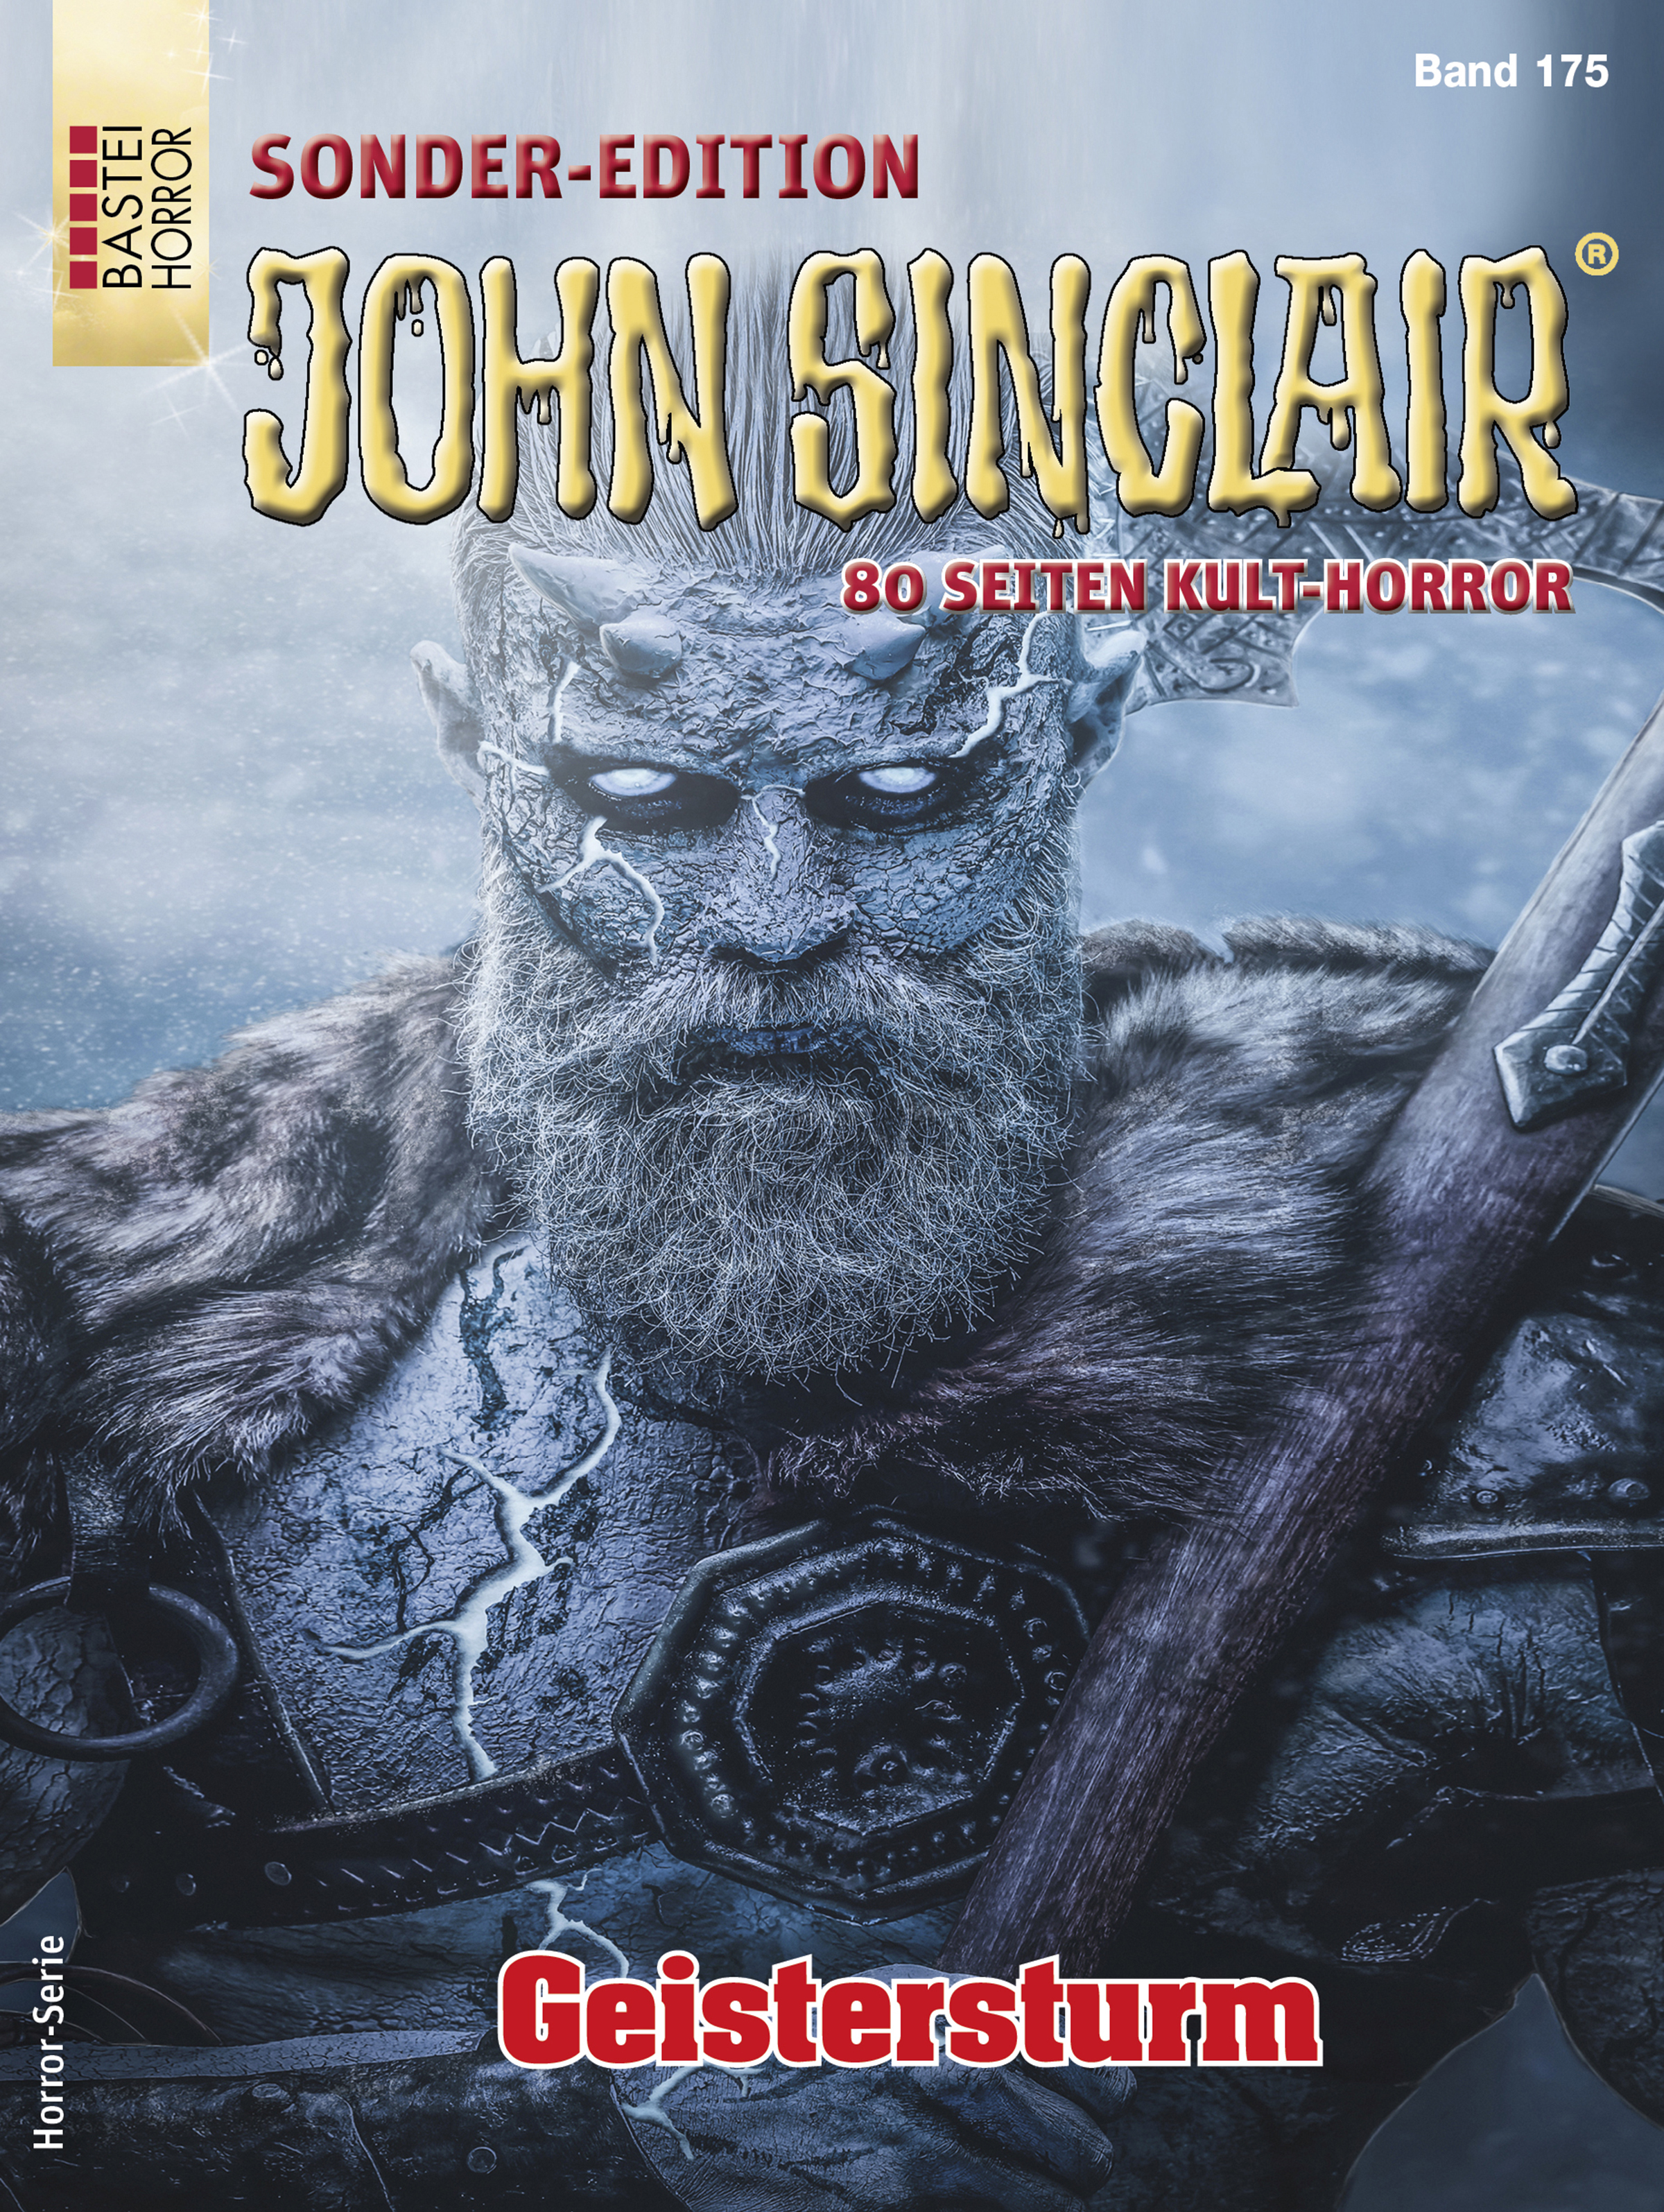 John Sinclair Sonder-Edition 175